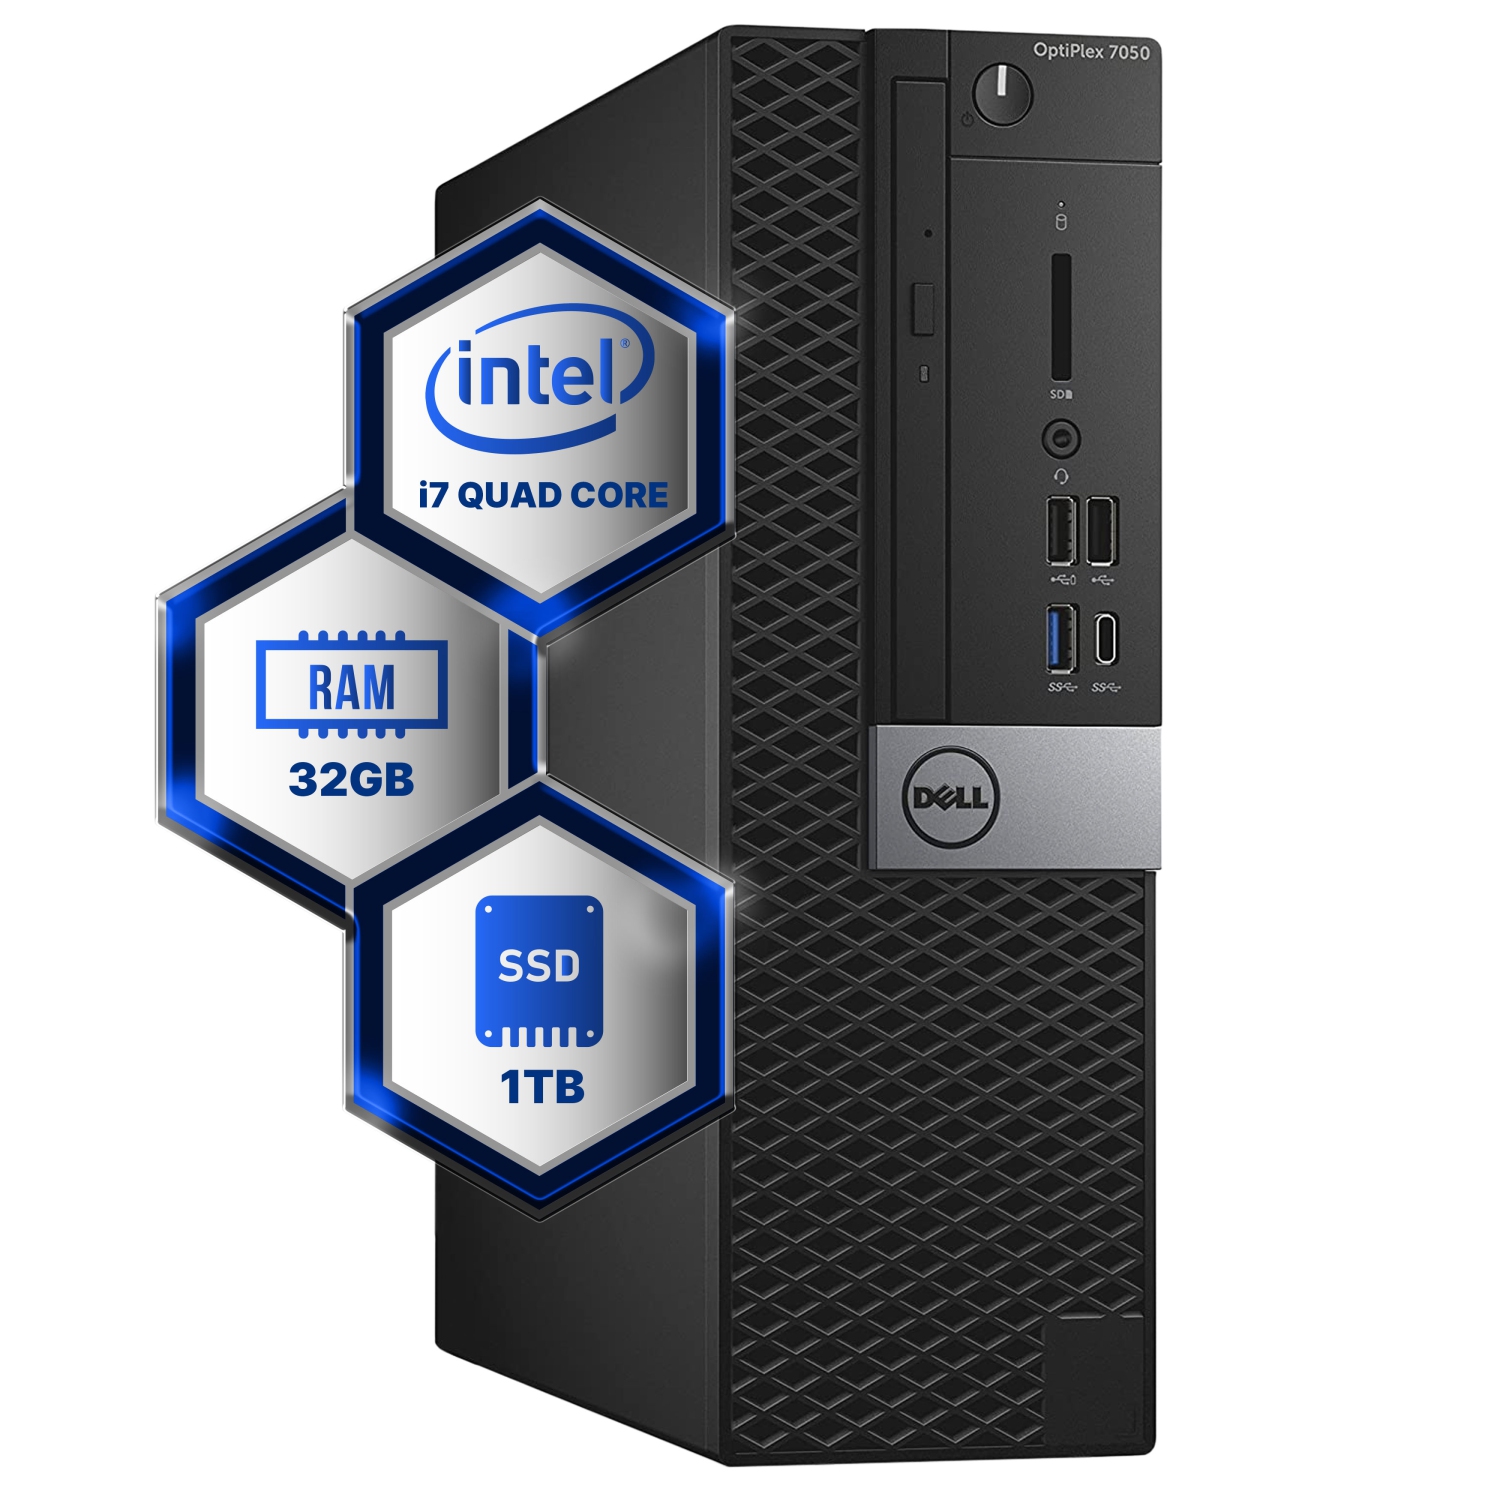 Refurbished (Good) - Dell Optiplex 7050 Desktop Computer | Quad Core Intel i7 (3.4) | 32GB DDR4 RAM | 1TB SSD Solid State | Windows 10 Professional | Home or Office PC